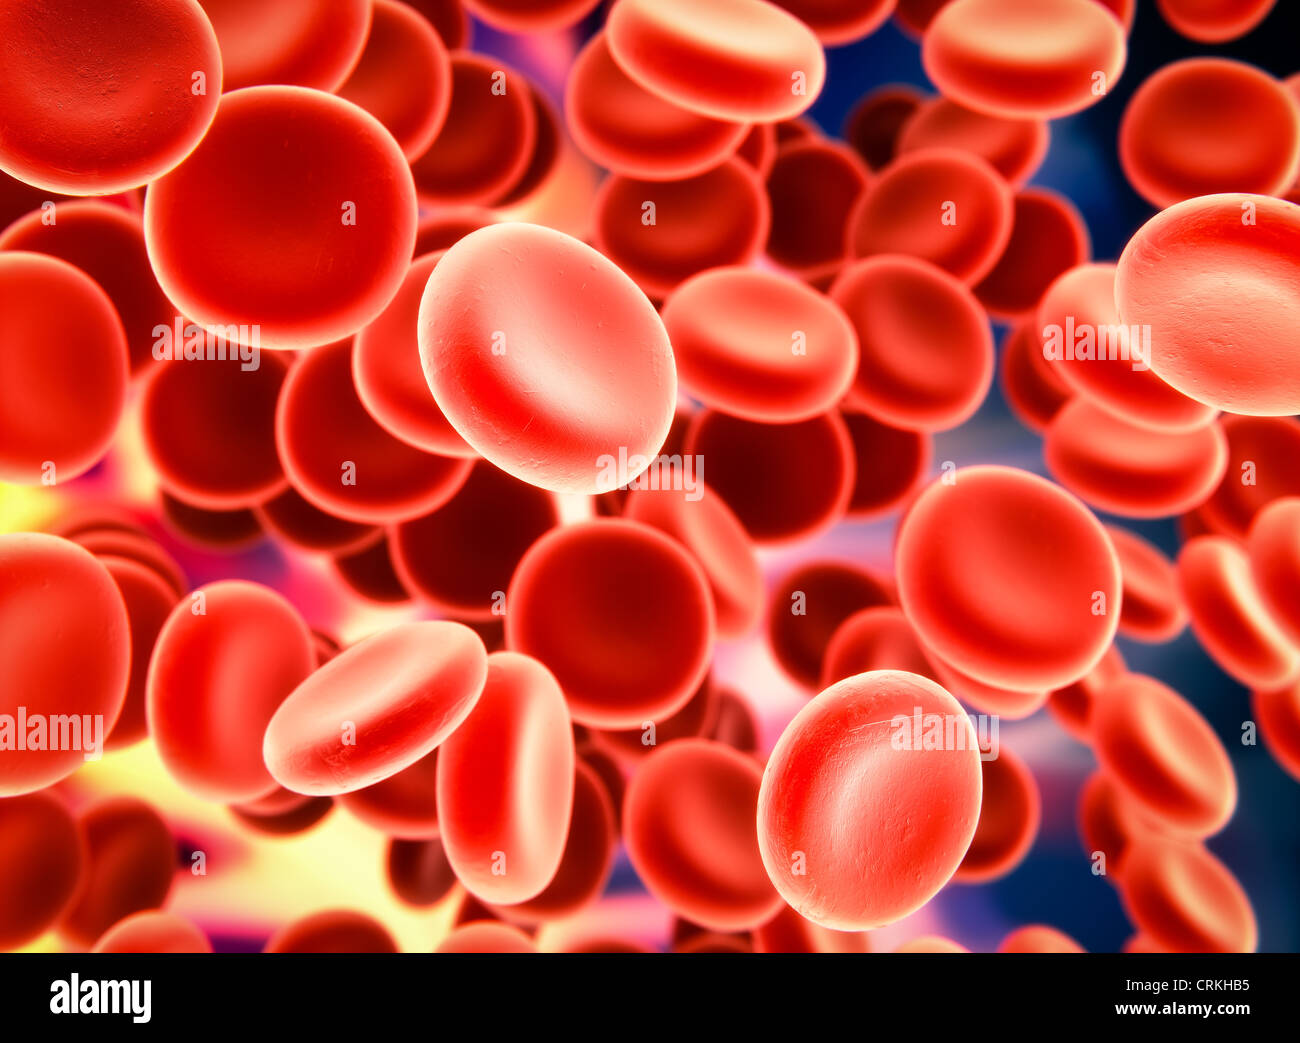 Blood cells - Scanning Electron Microscopy stylized illustration Stock Photo